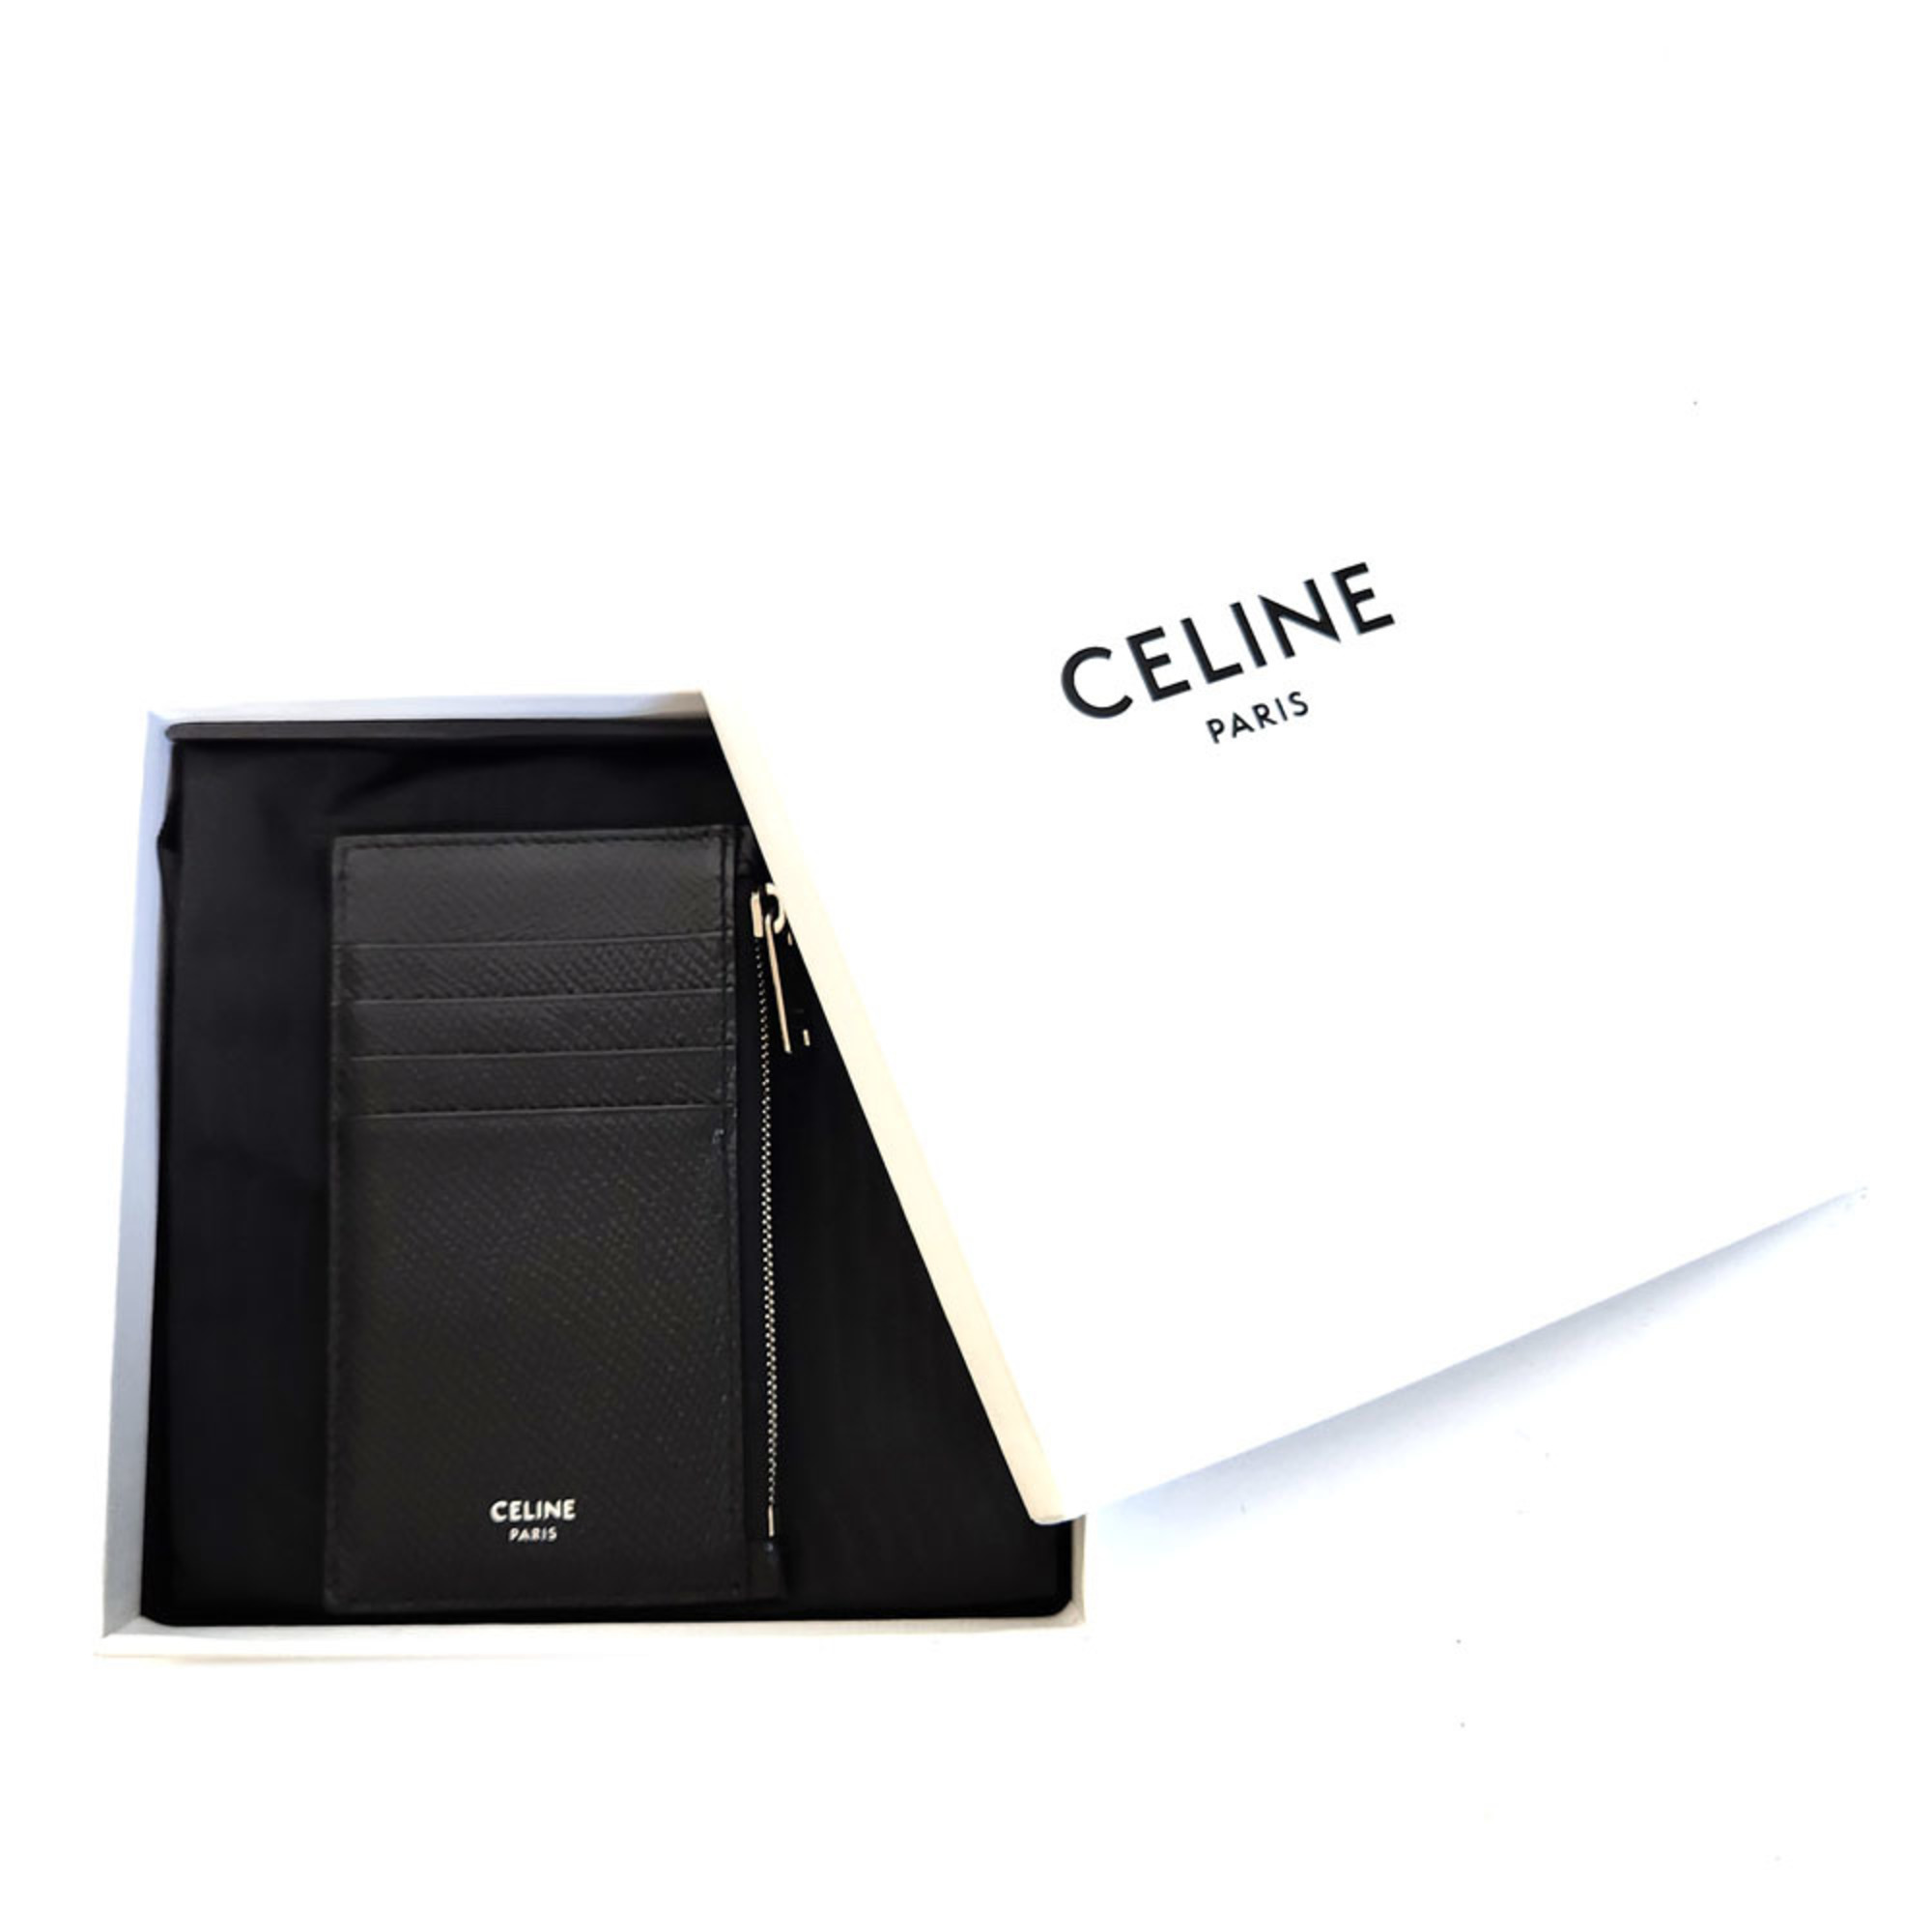 CELINE Fragment Case - Black Leather Wallet/Coin Case, Coin Purse, Business Card